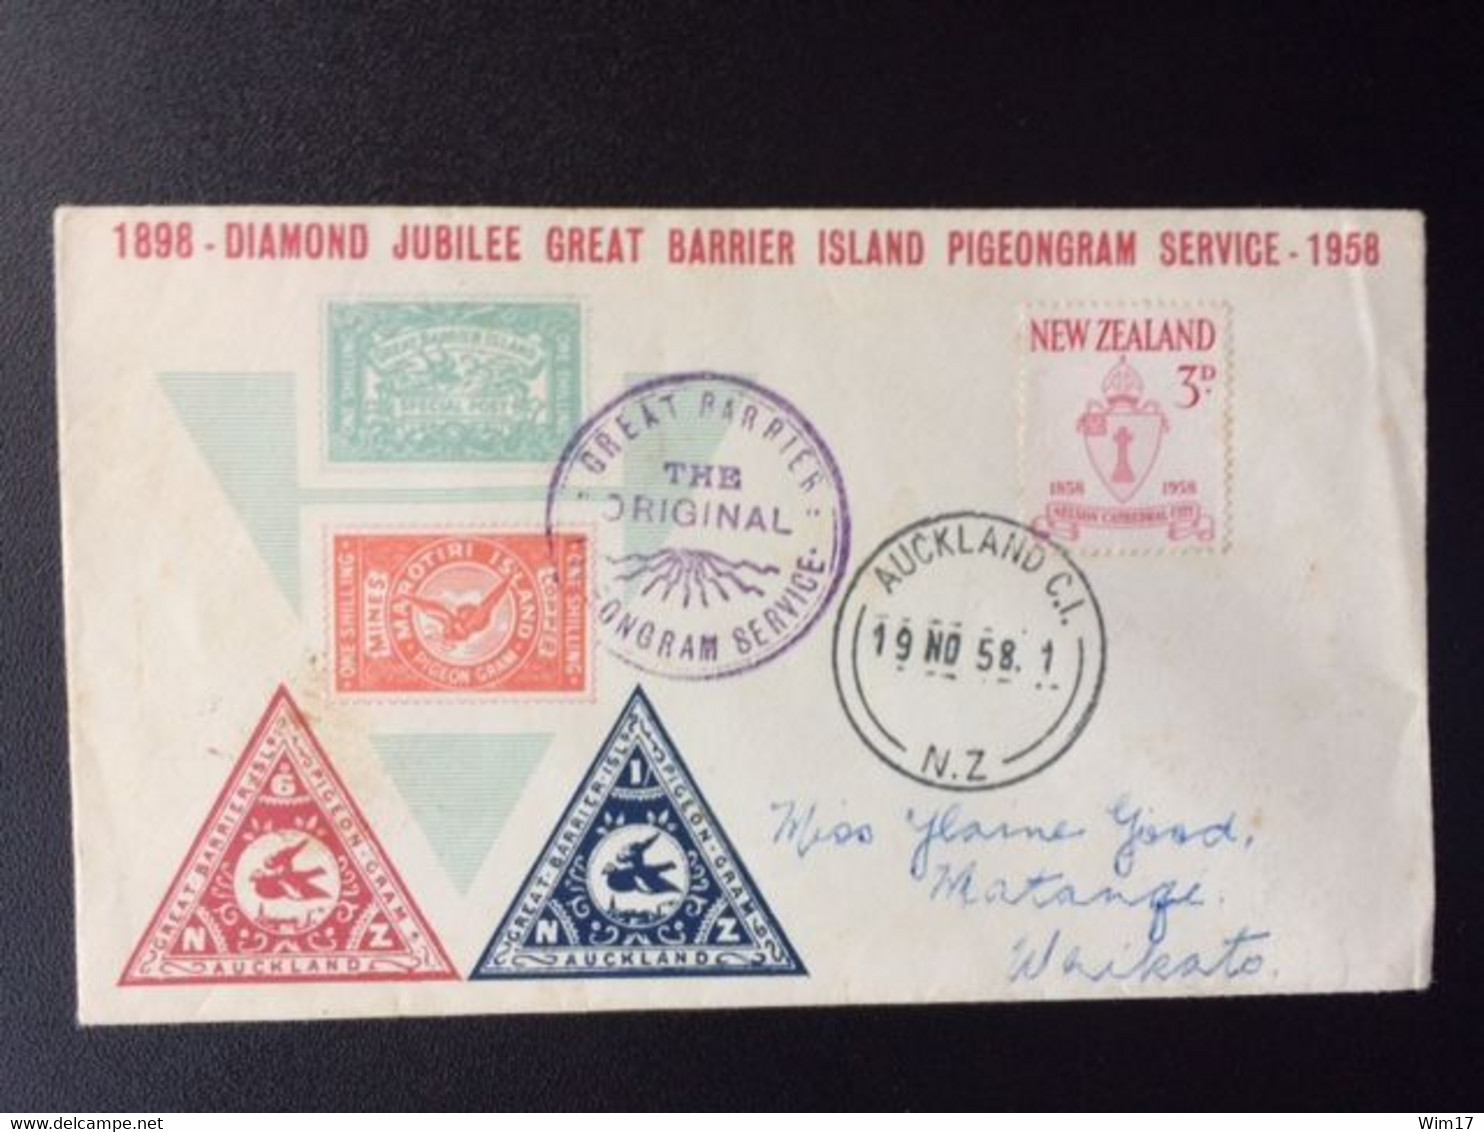 NEW ZEALAND 1958 GREAT BARRIER ISLAND PIGEONGRAM SERVICE 19-11-1958 TO WAIKATO NIEUW ZEELAND - Covers & Documents